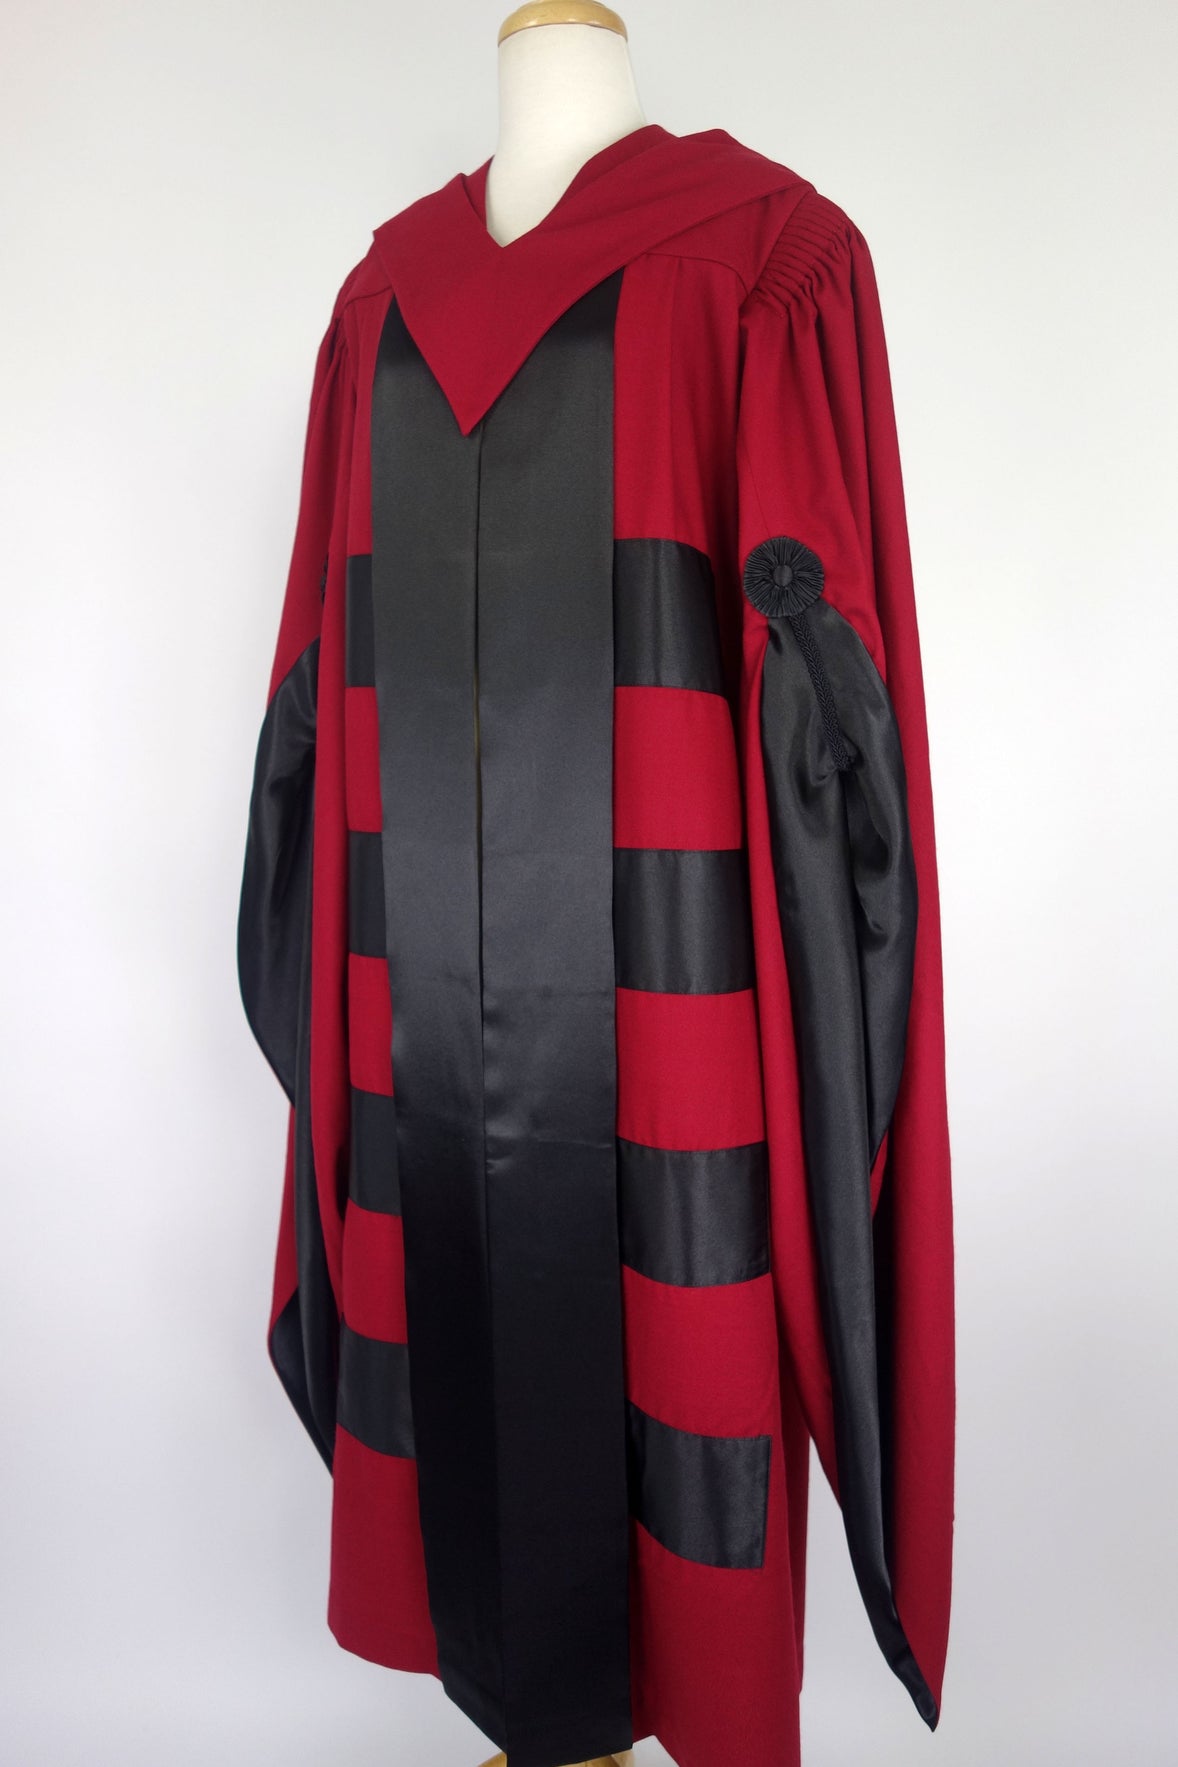 Curtin University PhD Graduation Gown Set - Gown, Hood and Bonnet